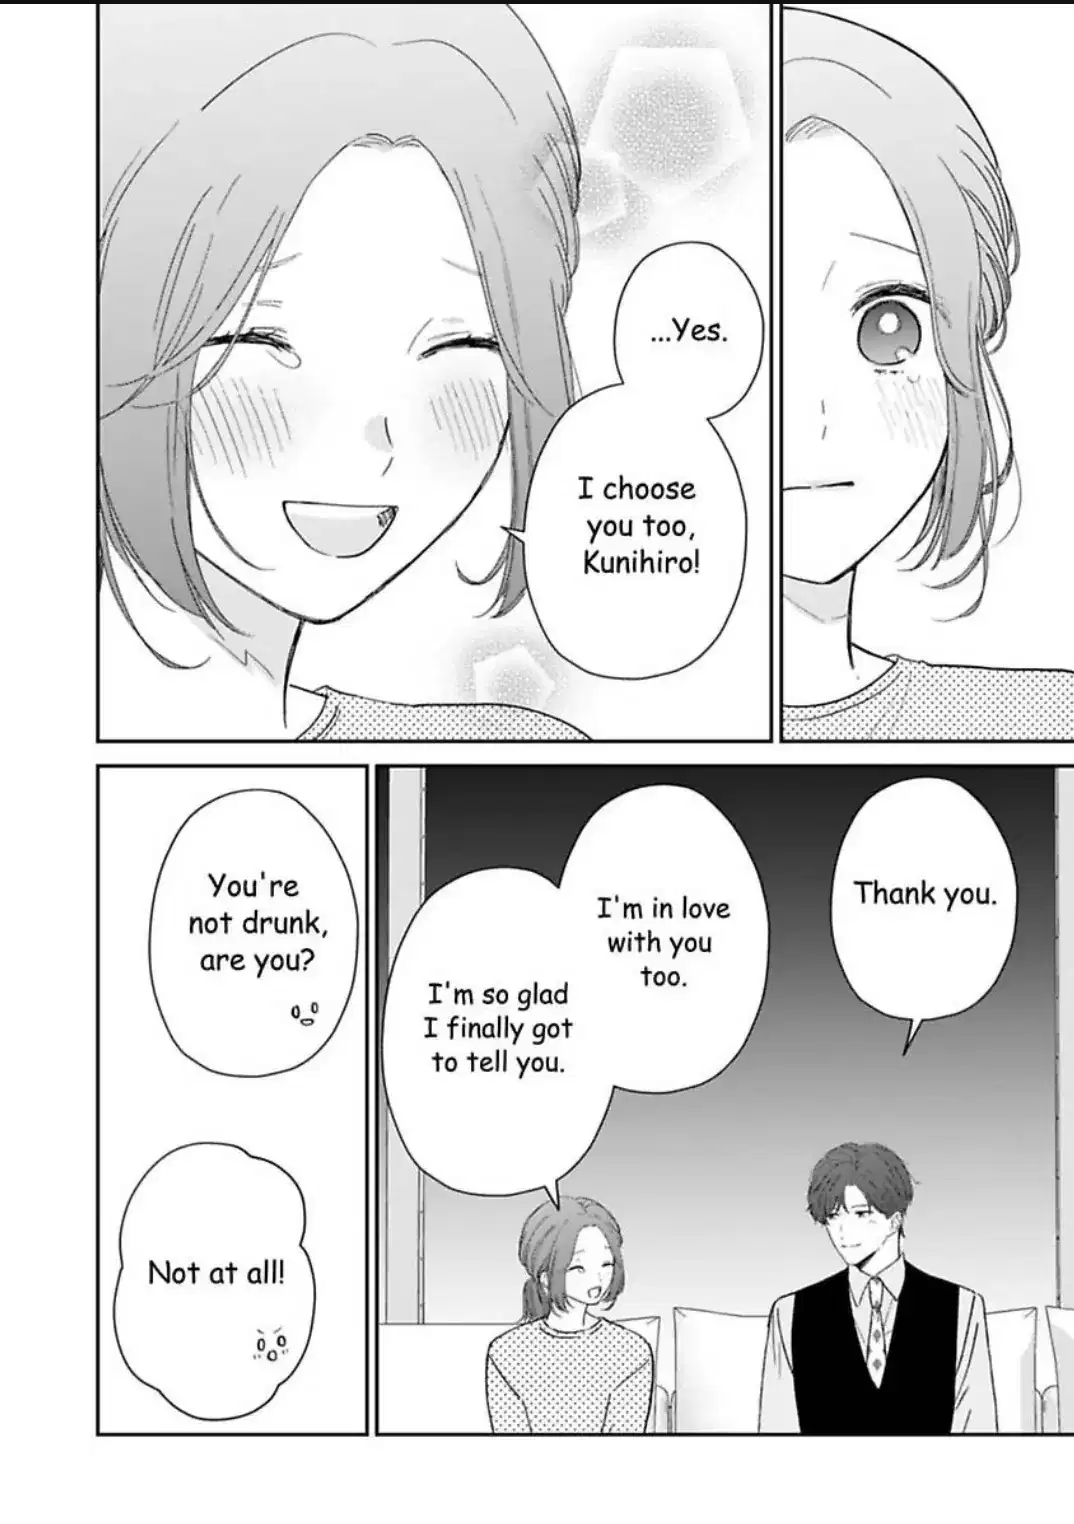 Oops, I Said Yes!: Kunihiro Kasai Chapter 16 - page 17